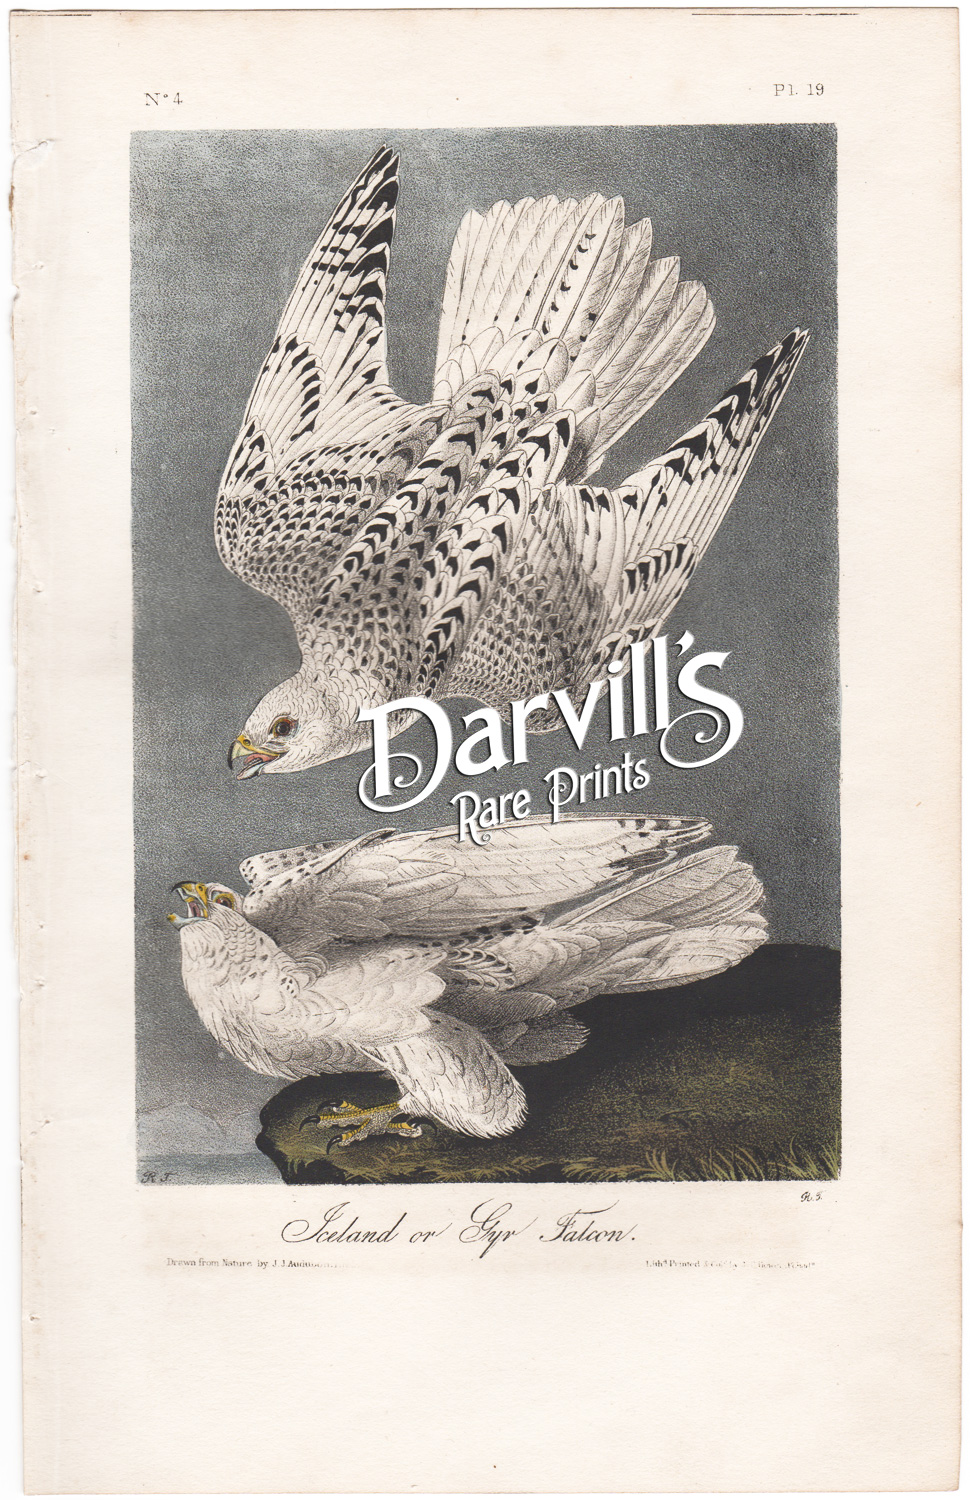 Audubon Iceland or Gyr Falcon plate 19 first edition